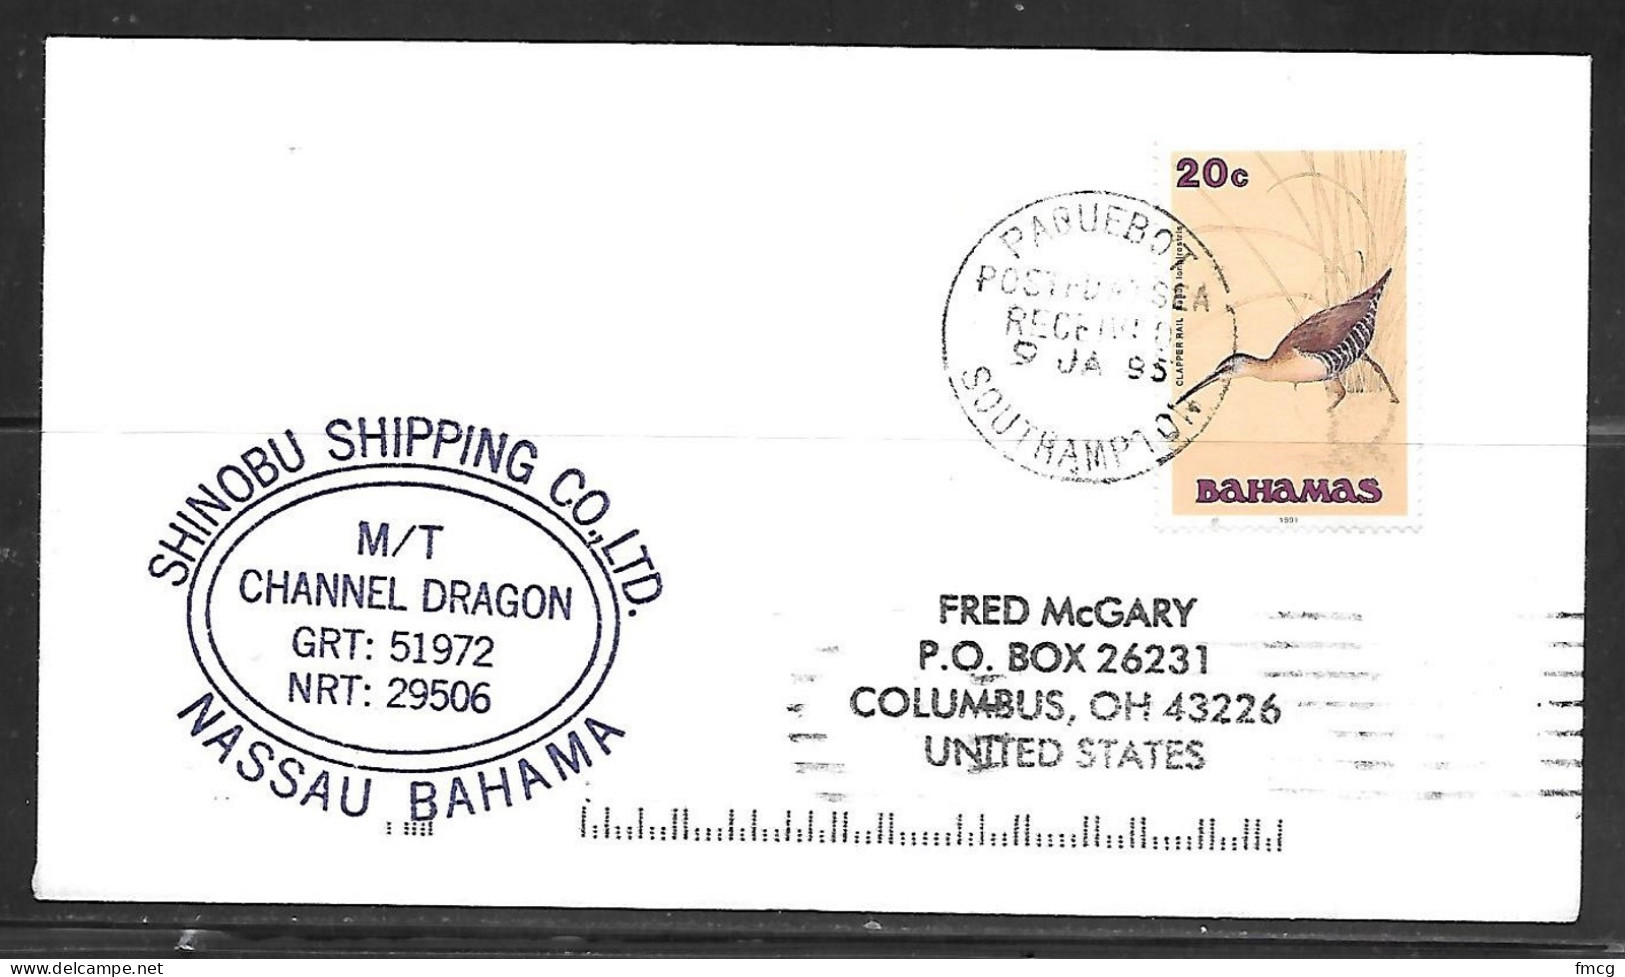 1995 Paquebot Cover, Bahamas Bird Stamp Mailed In Southampton, United Kingdom - Bahamas (1973-...)